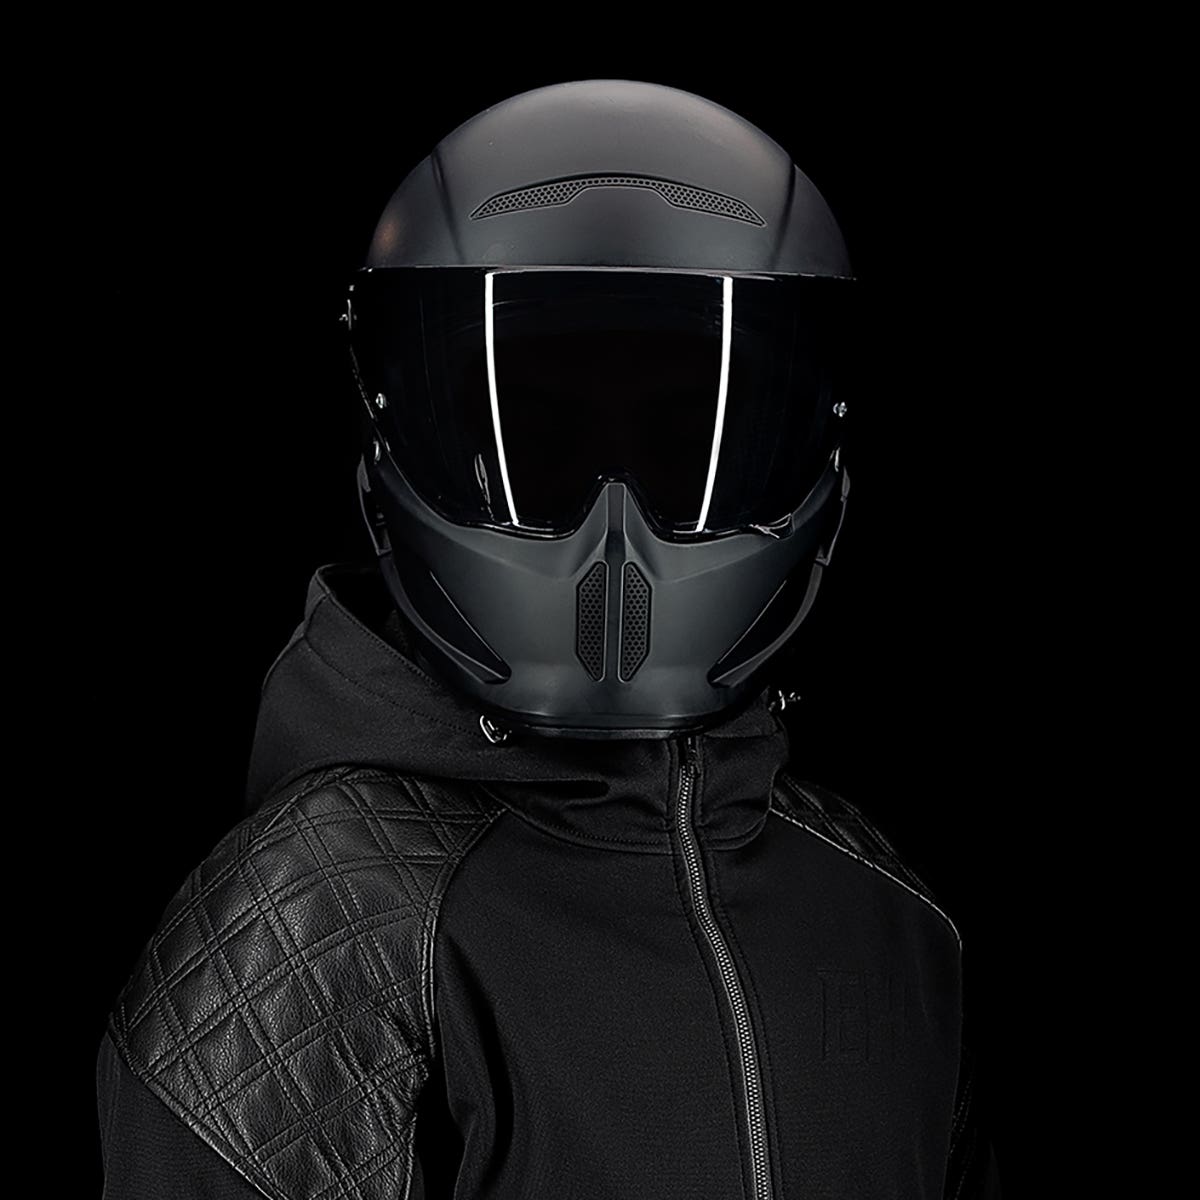 Ruroc's New Atlas 3.0 Is the Ultimate Full-Face Motorcycle Helmet